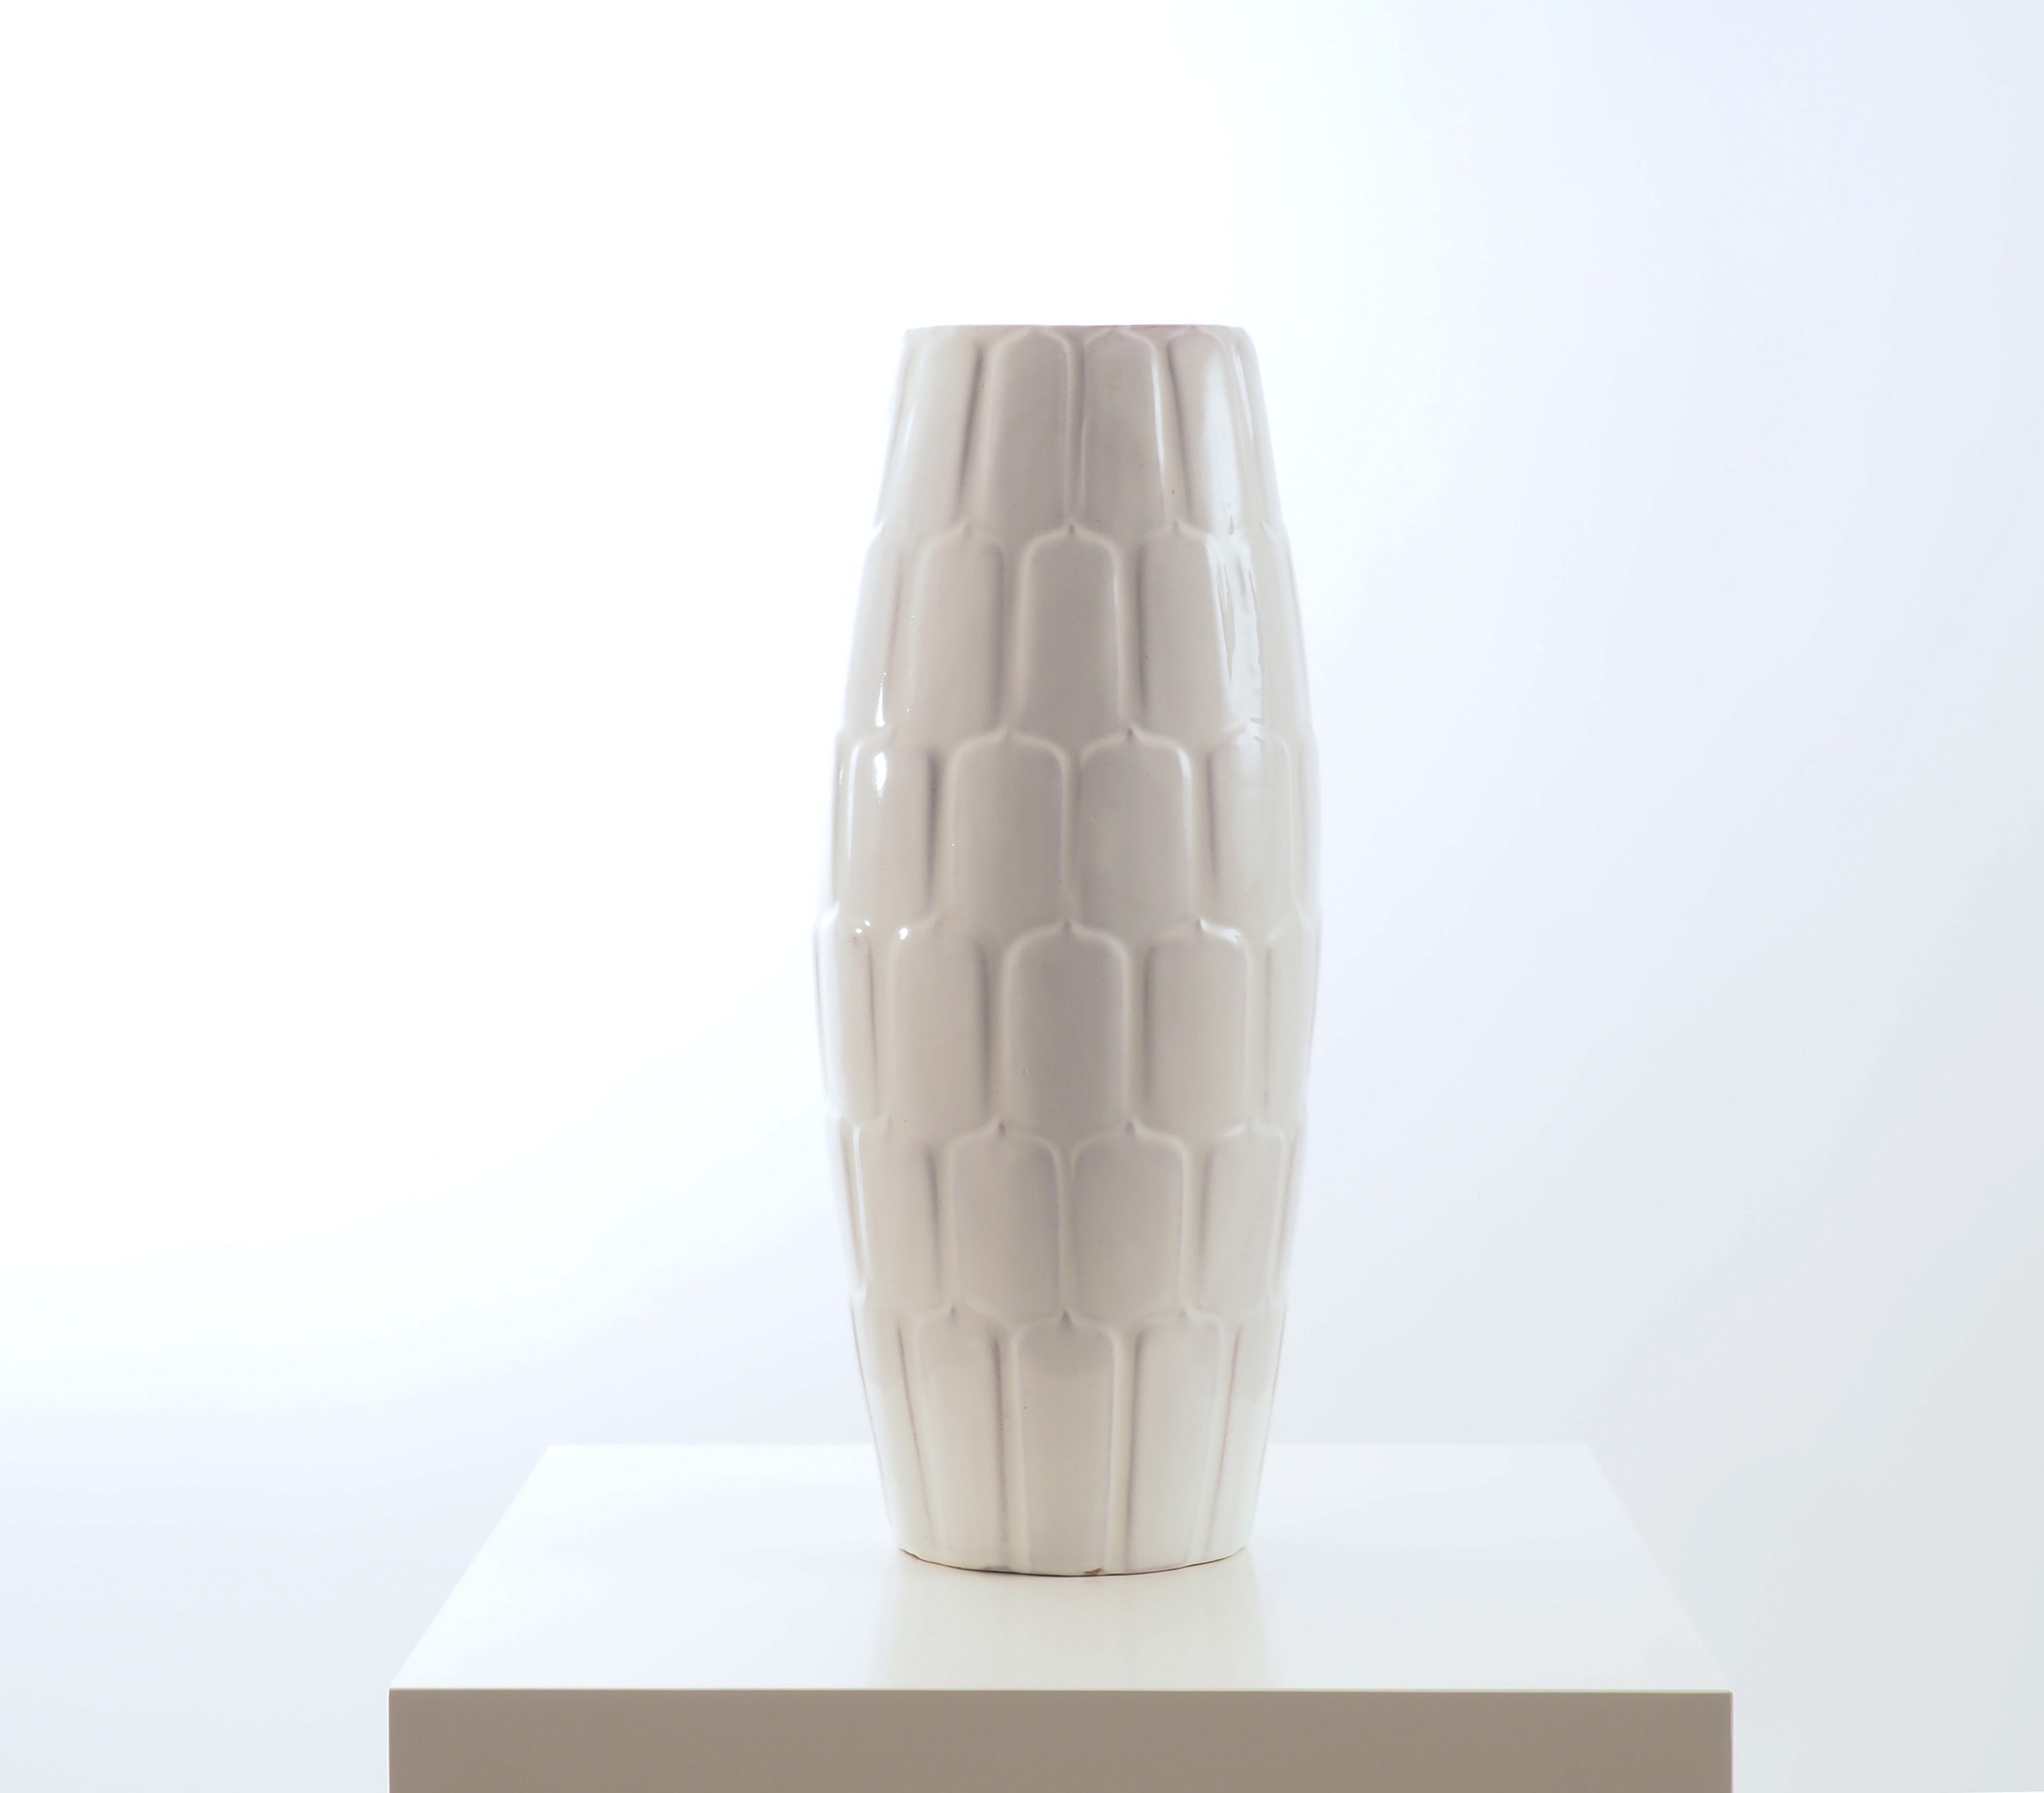 Floor Vase by Anna-Lisa Thomson